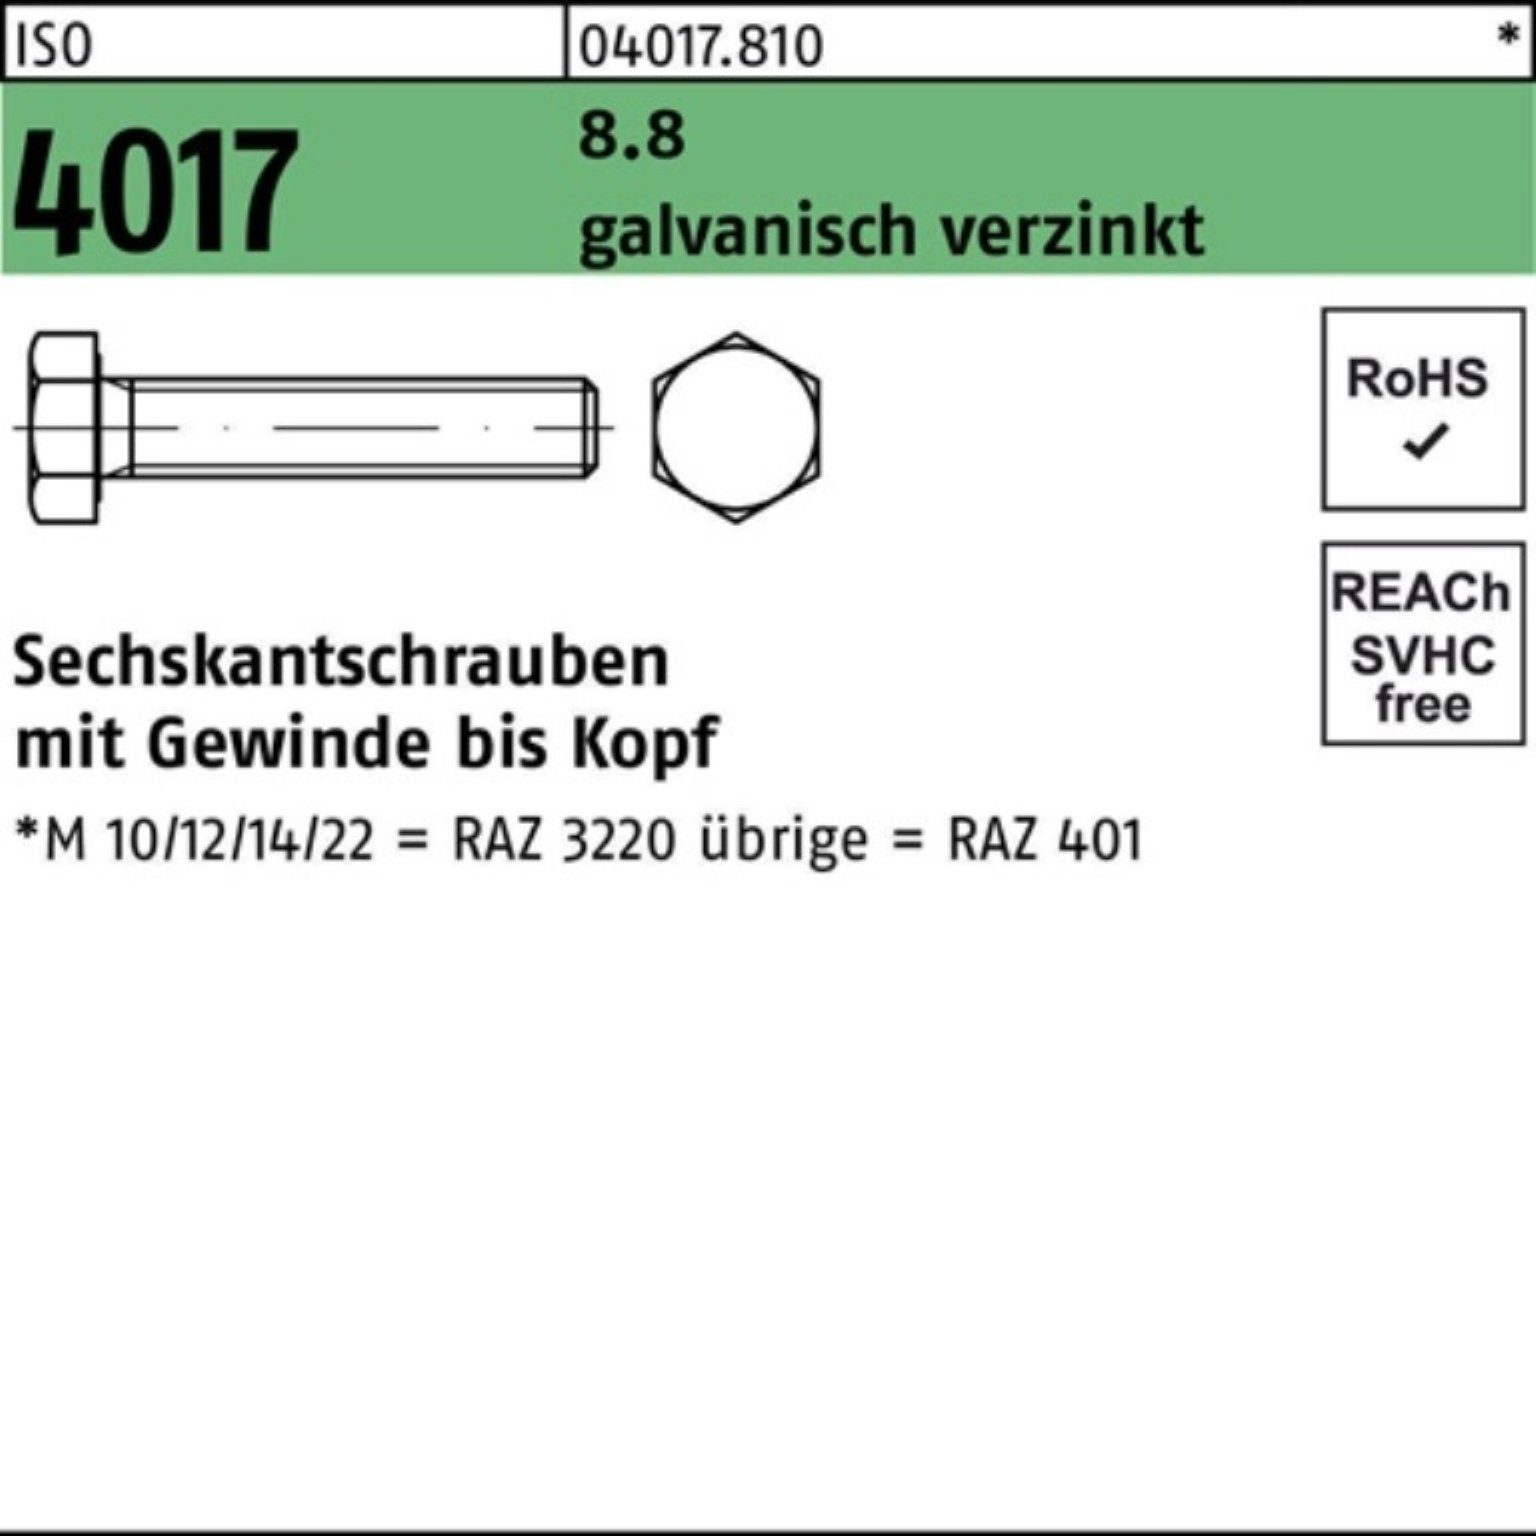 Bufab Sechskantschraube 100er St 8.8 M10x 75 VG 100 Sechskantschraube galv.verz. 4017 Pack ISO